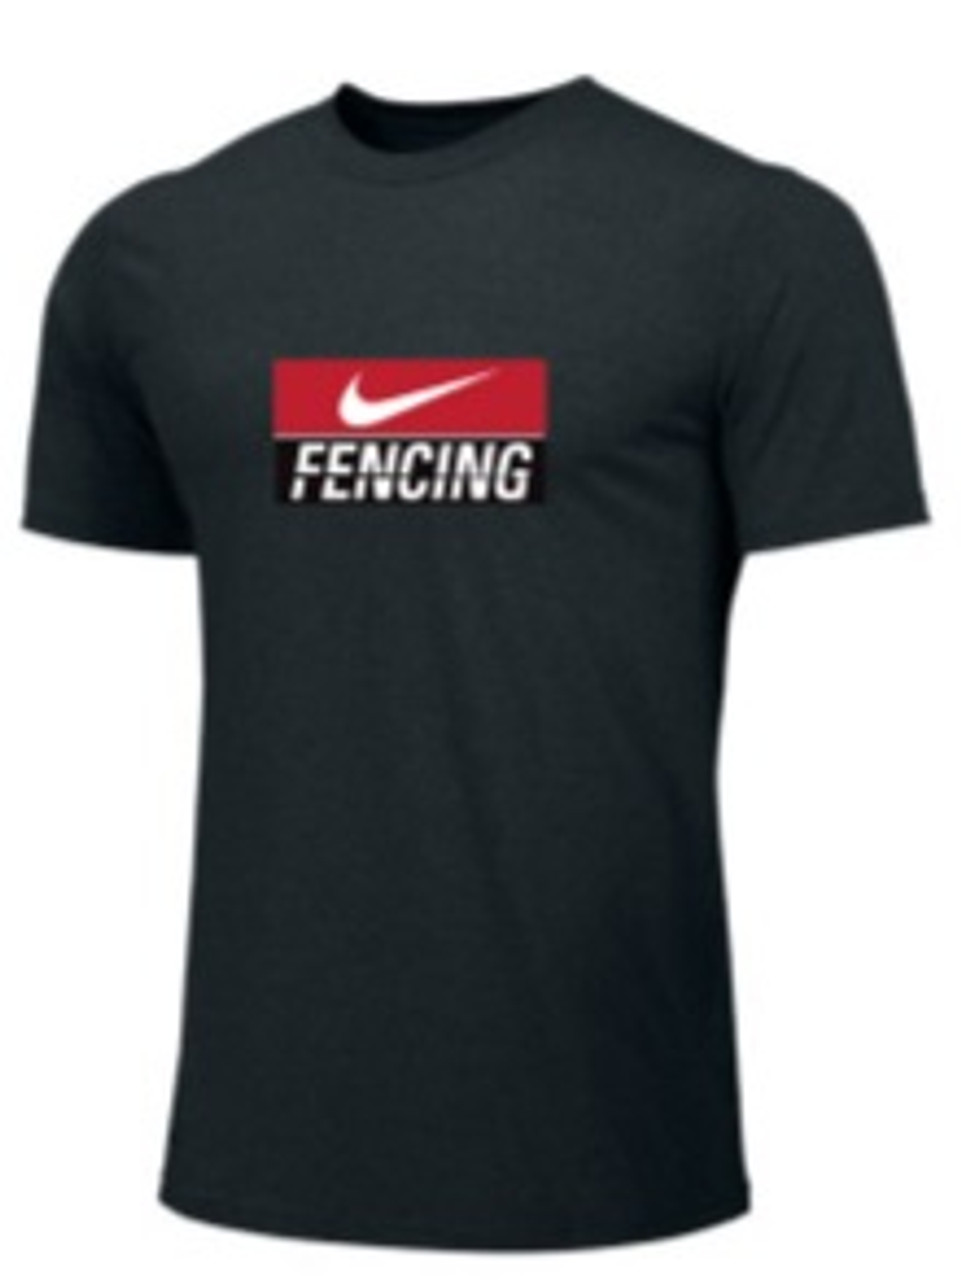 Nike Men's Fencing Training Tee - Black 